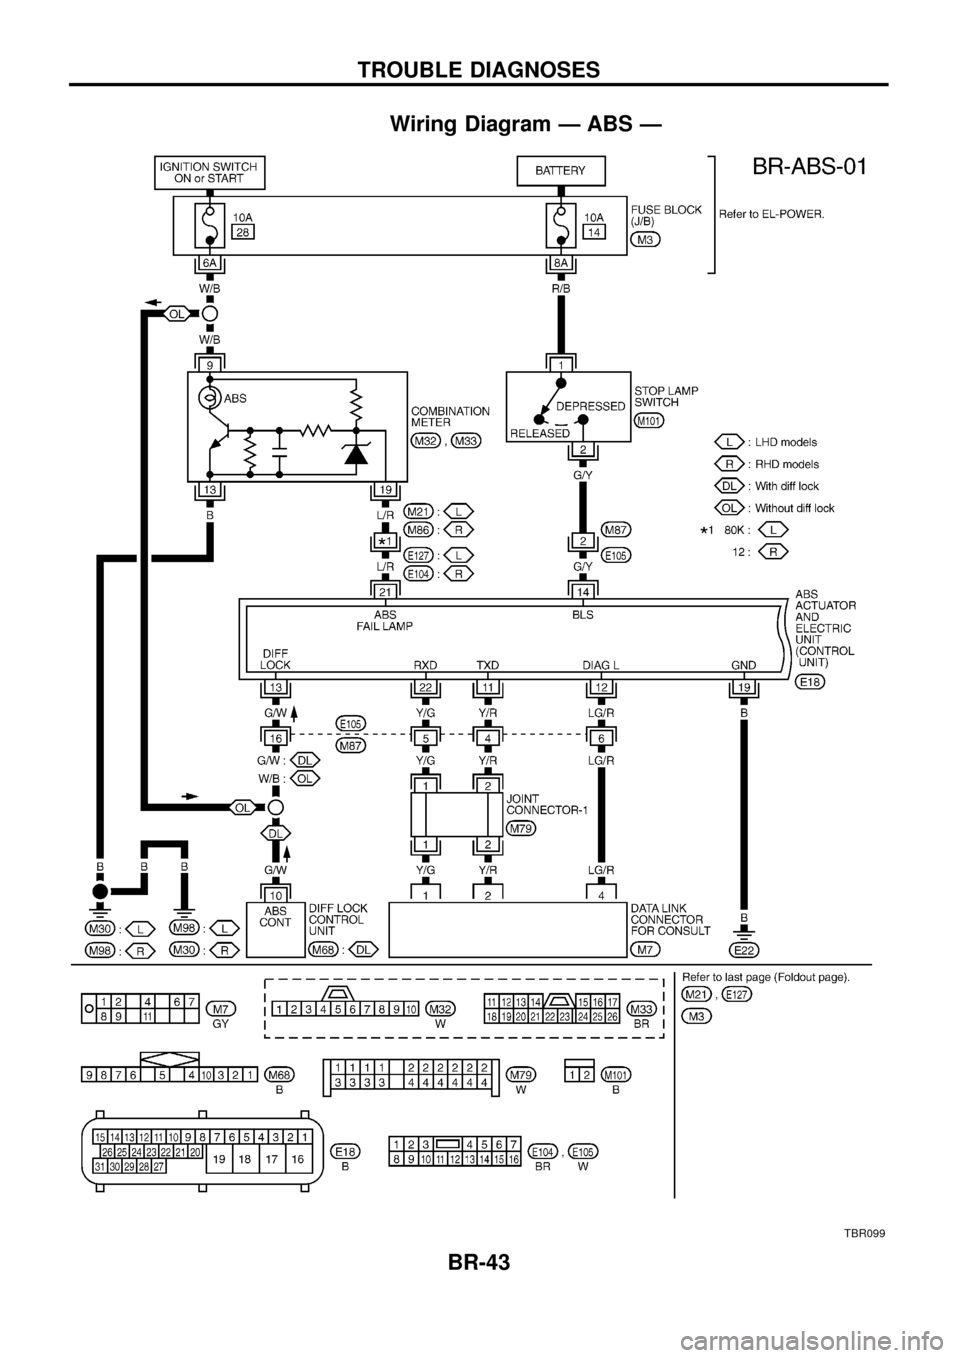 NISSAN PATROL 1998 Y61 / 5.G Brake System Service Manual Wiring Diagram Ð ABS Ð
TBR099
TROUBLE DIAGNOSES
BR-43 